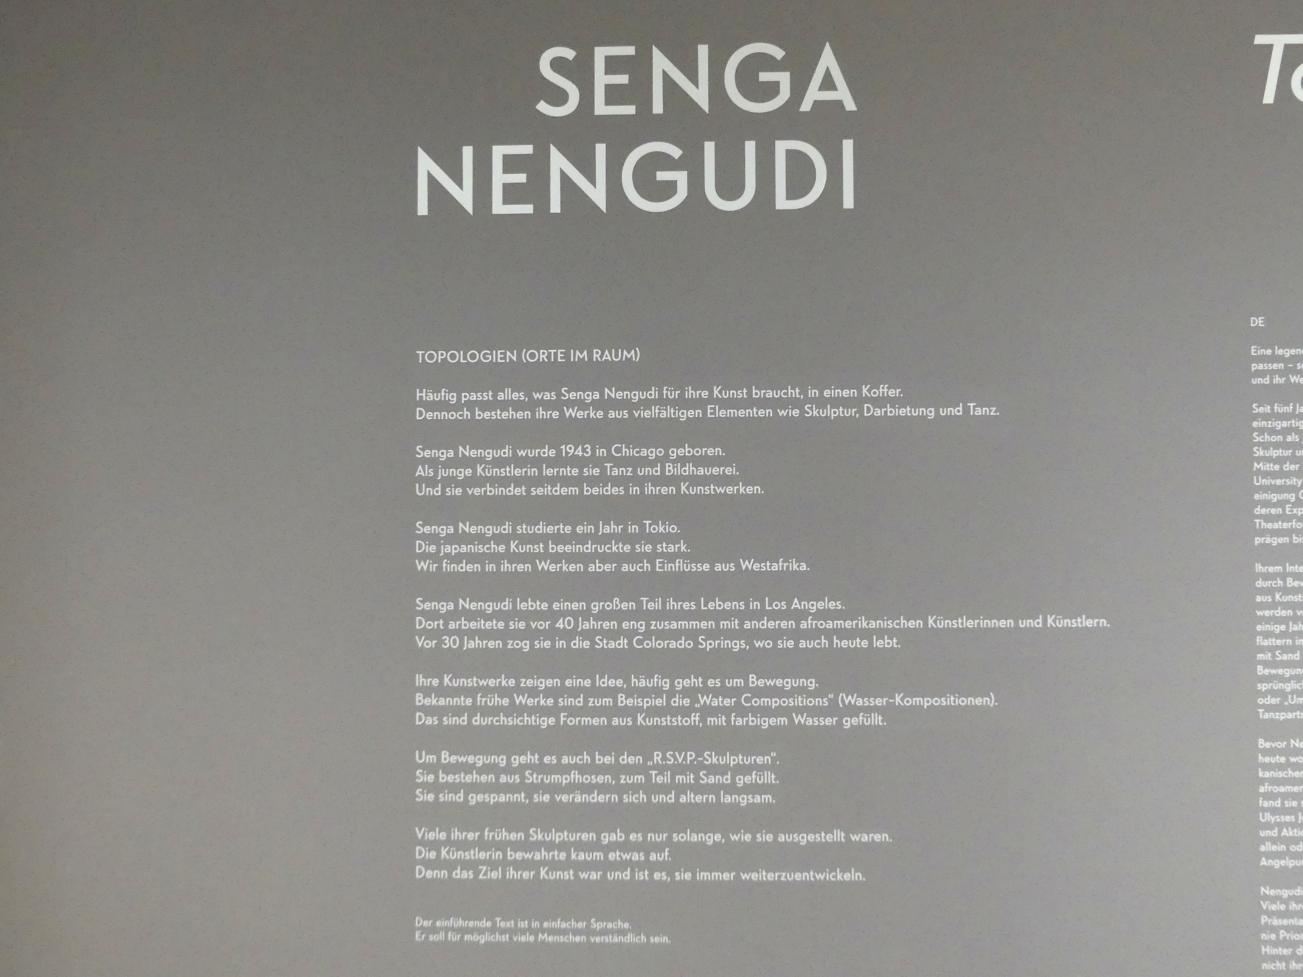 München, Lenbachhaus, Ausstellung "Senga Nengudi Topologien" vom 17.09.-19.01.2020, Saal 1, Bild 2/9